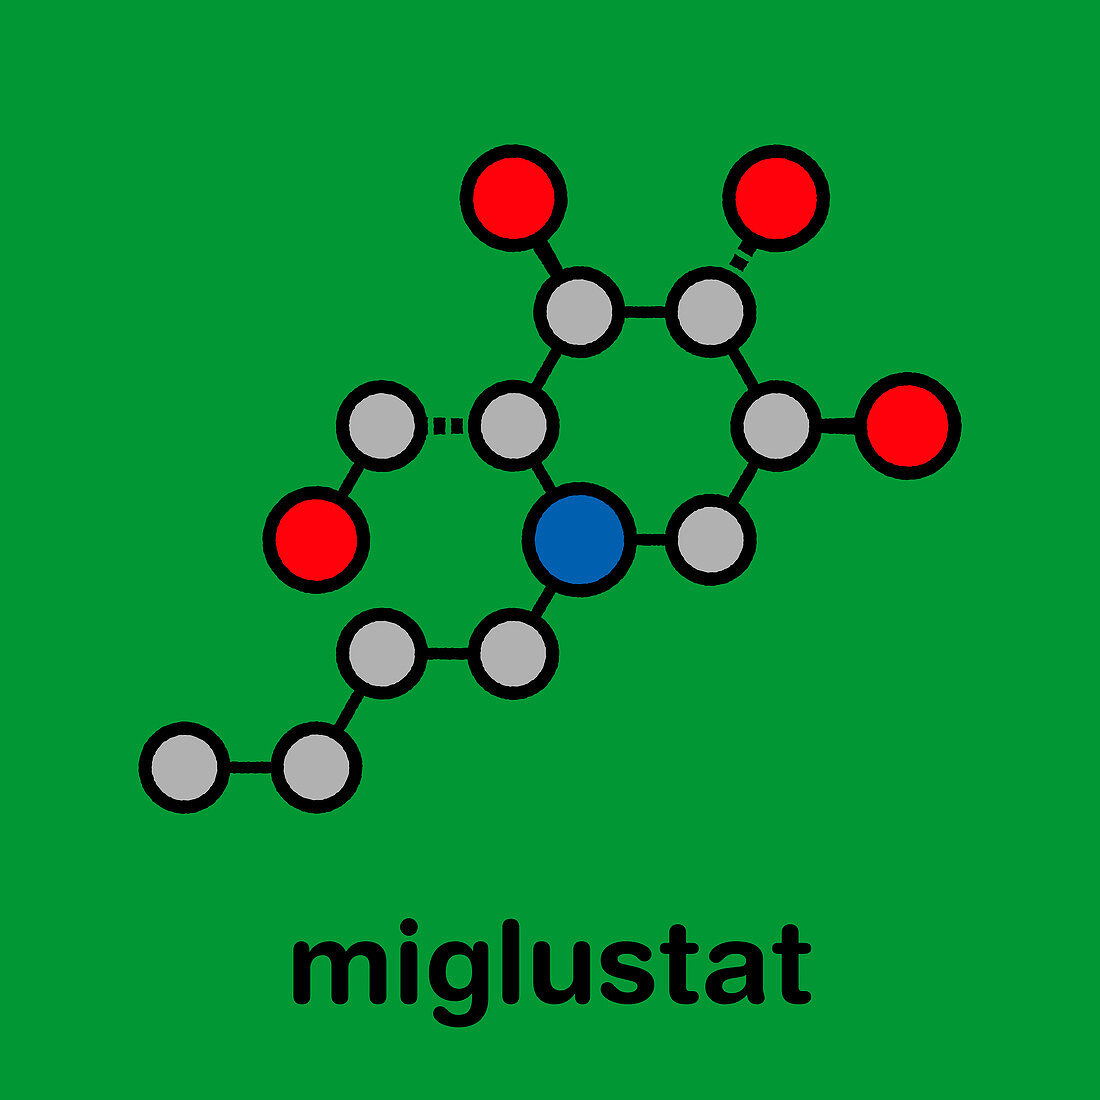 Miglustat Gaucher disease drug, molecular model